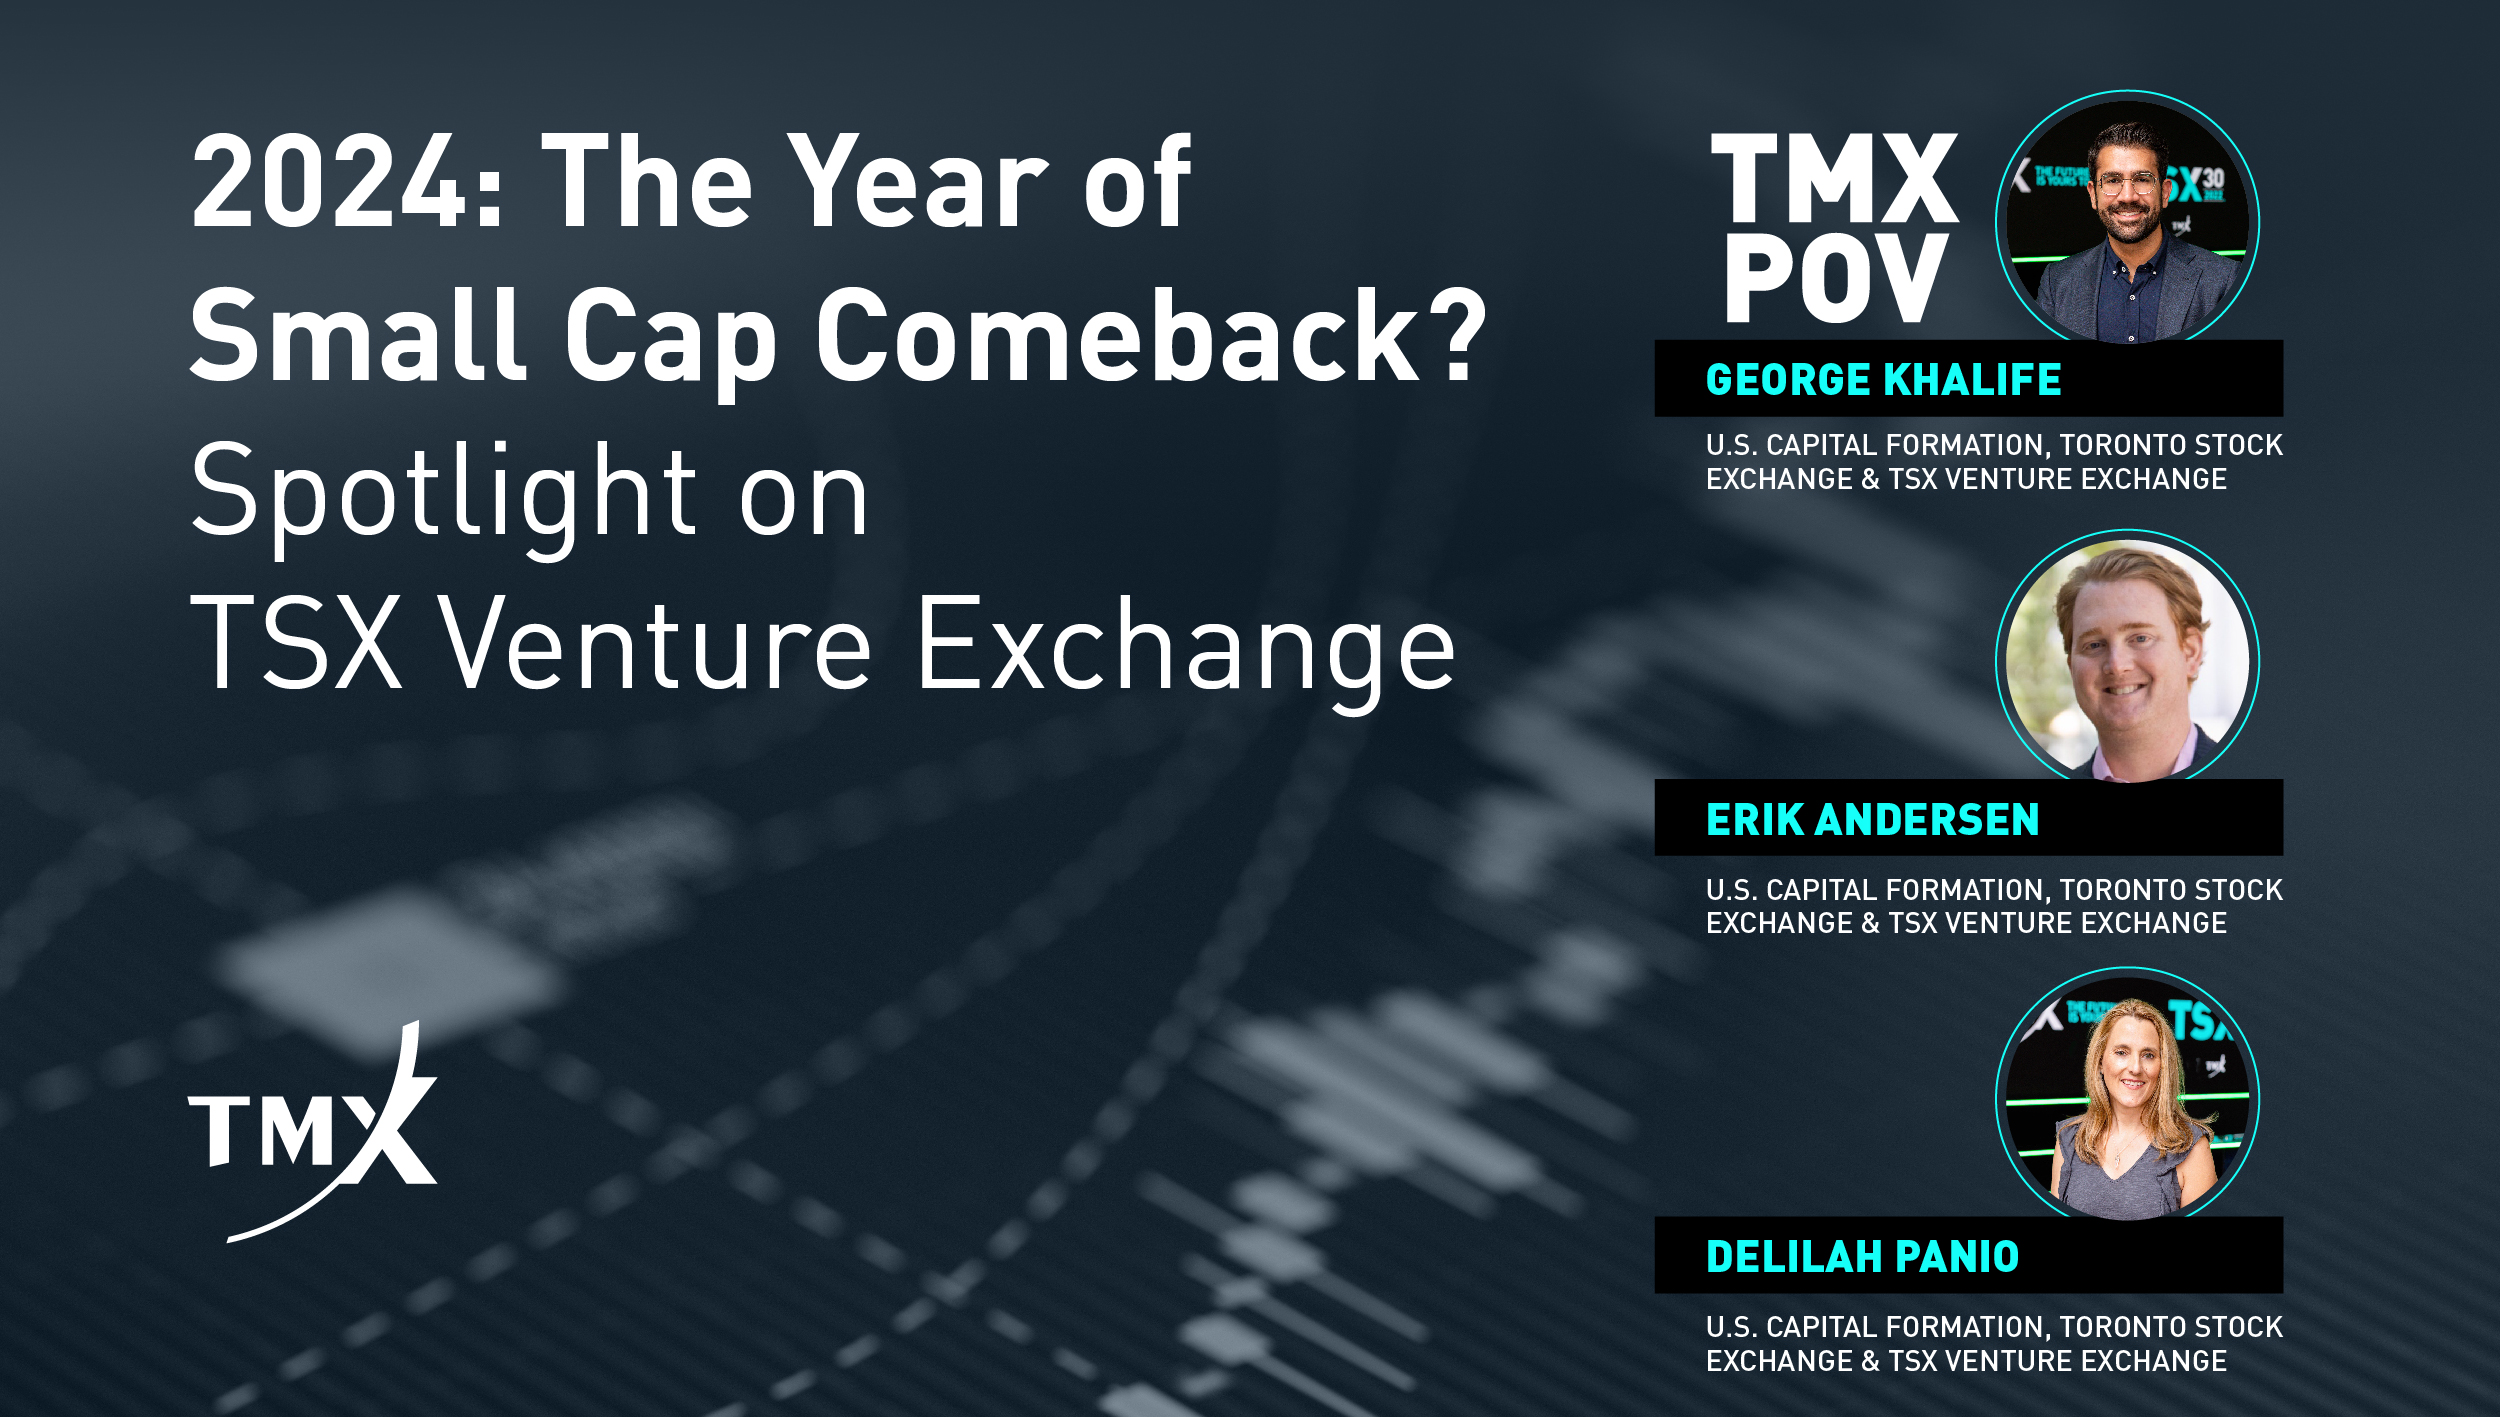 TMX POV - 2024: The Year of Small Cap Comeback? - Spotlight on TSX Venture Exchange